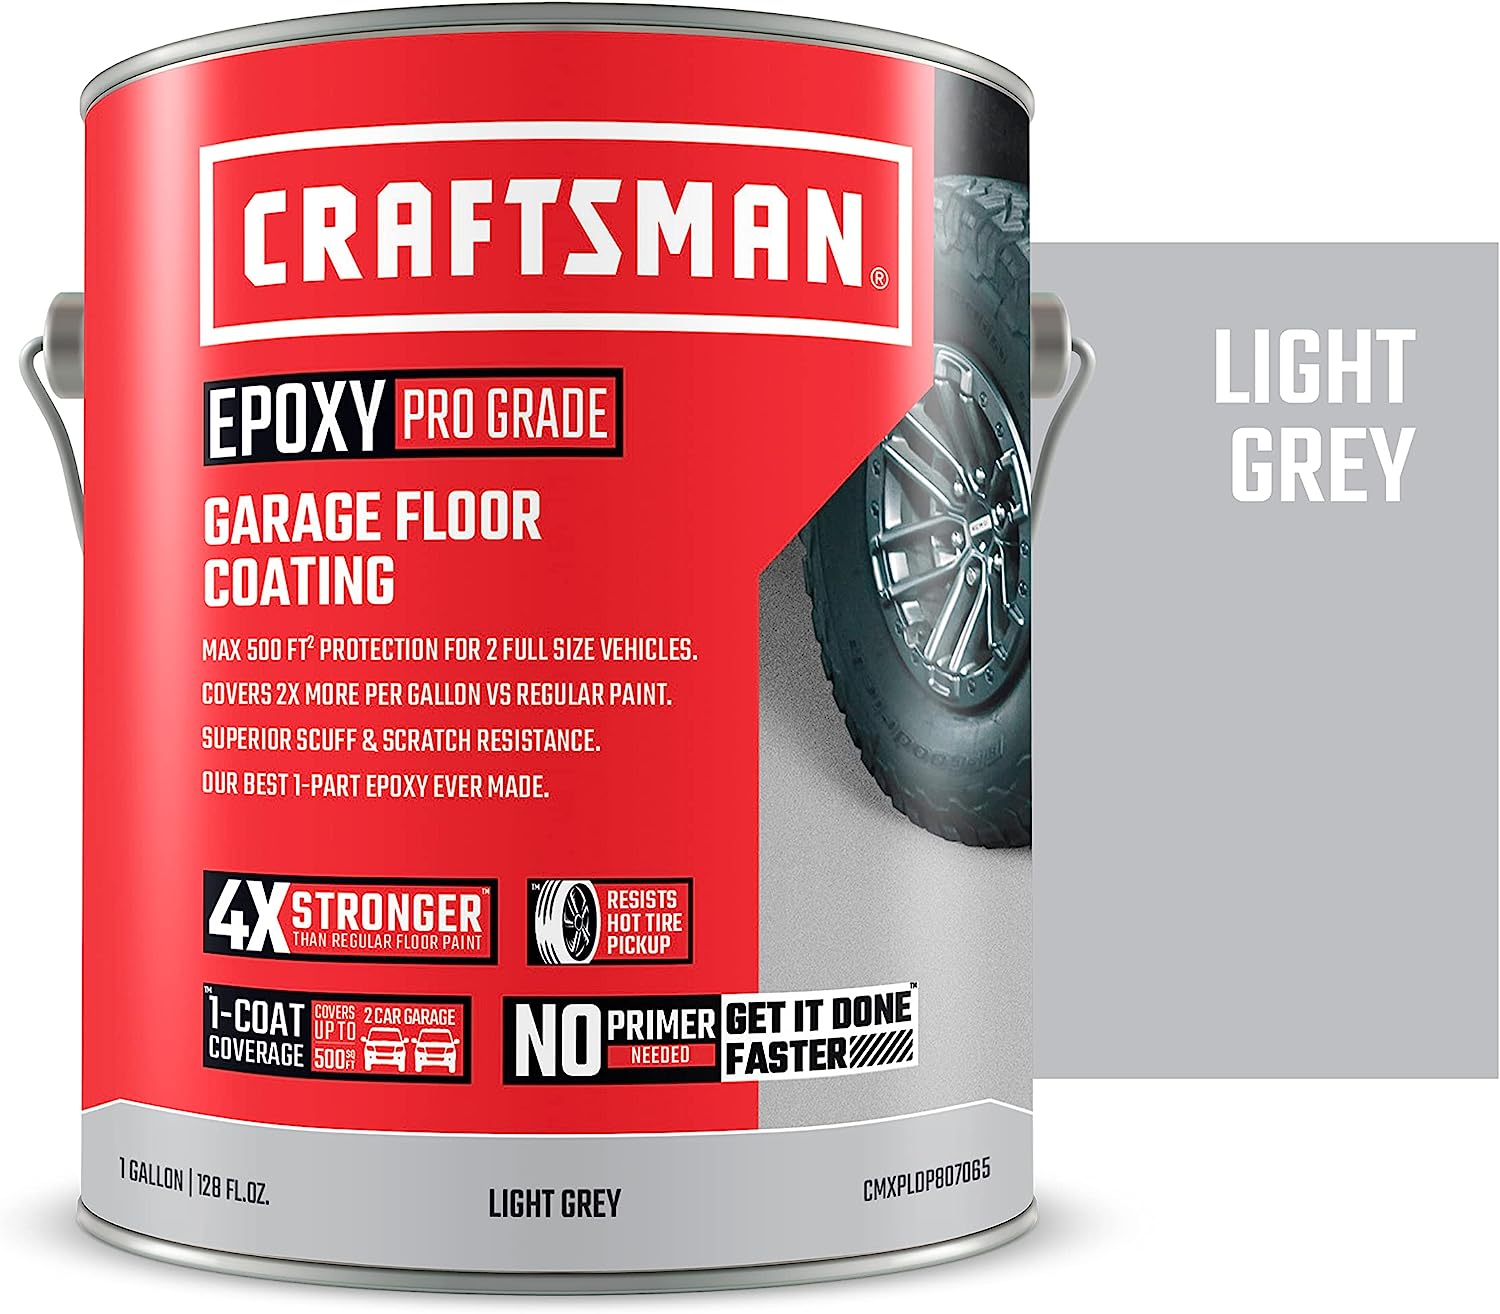 CRAFTSMAN Pro Grade Specialty Coating - Premium 1 [...]